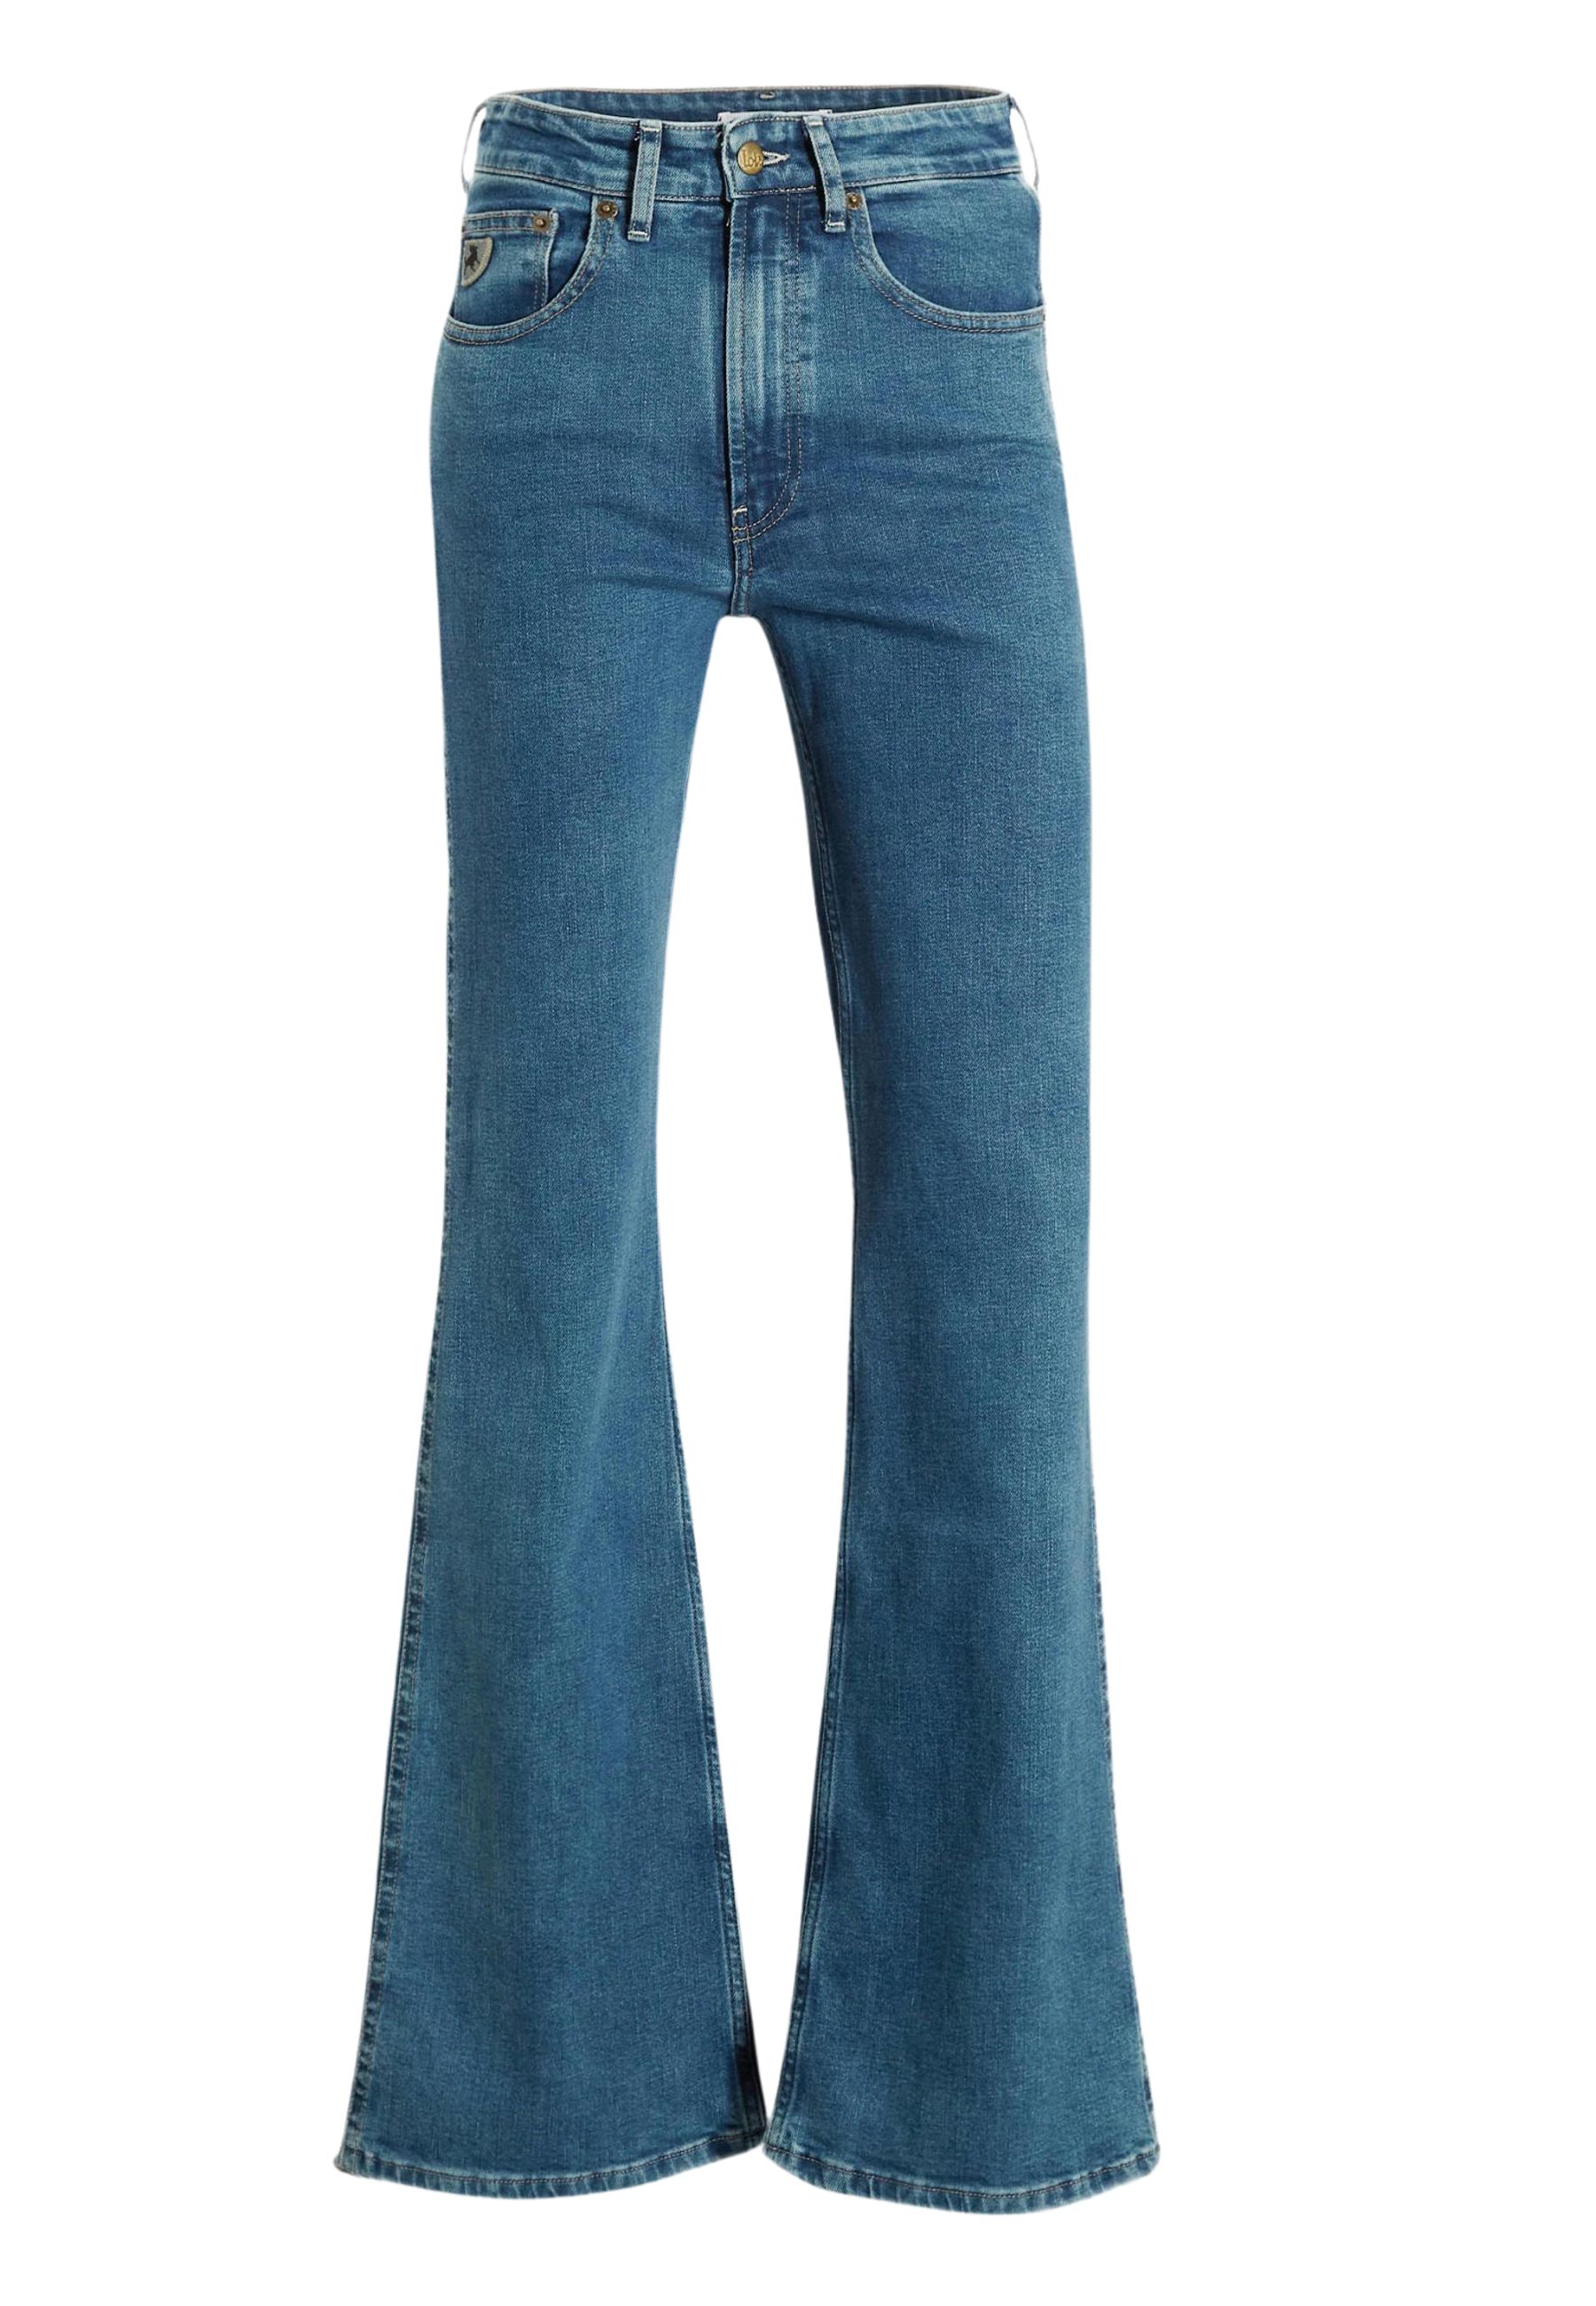 Jeans Blauw Raval edge jeans blauw